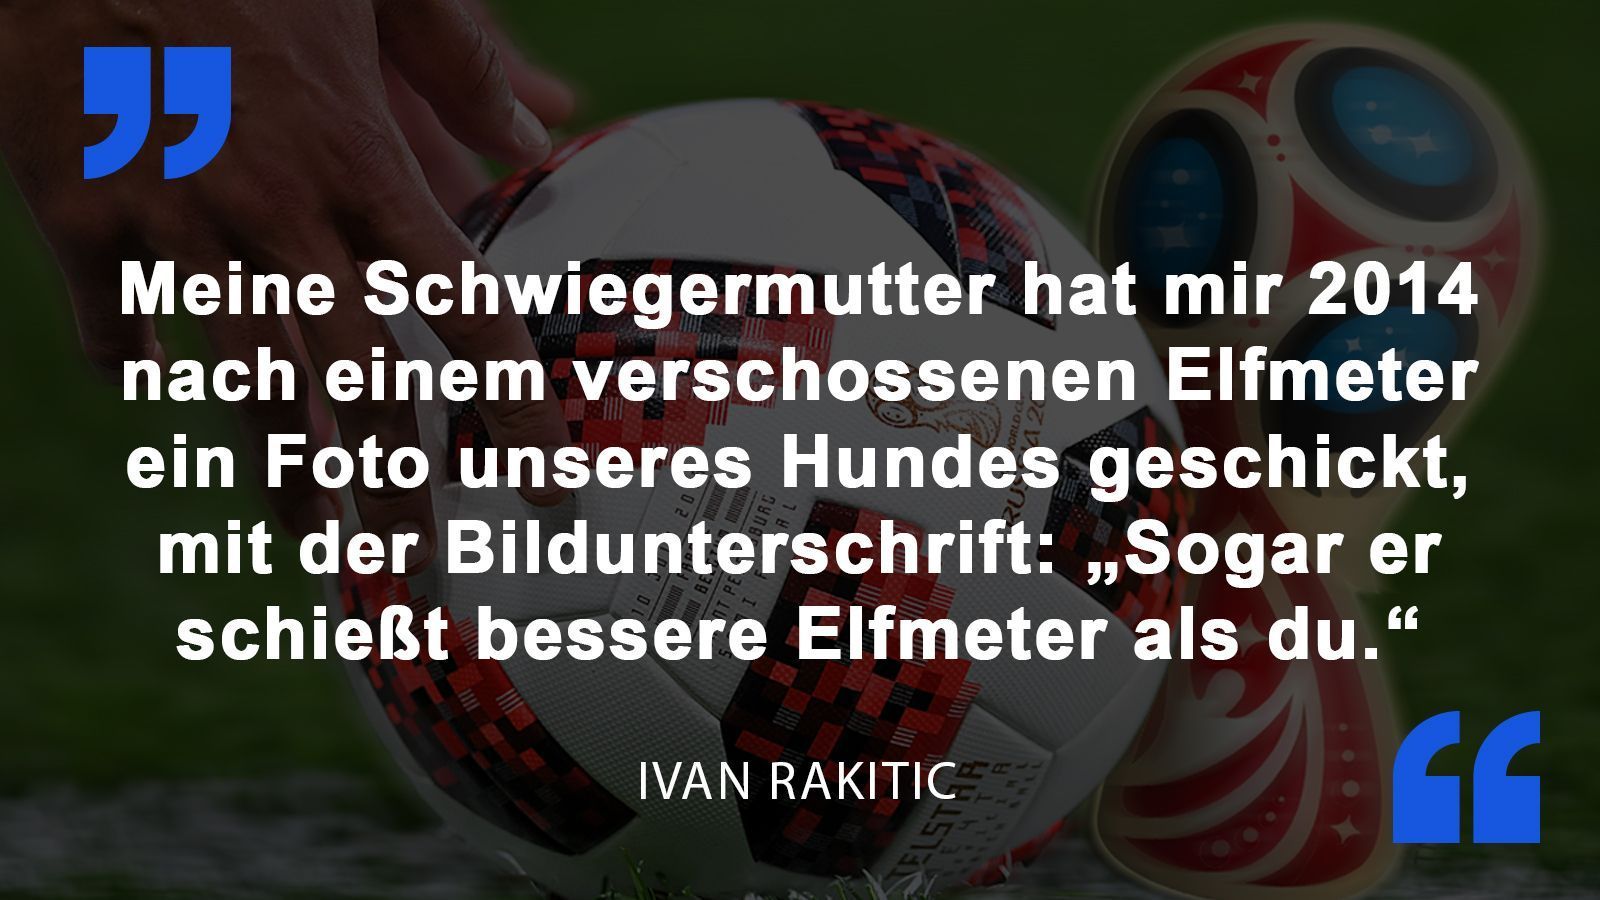 
                <strong>Ivan Rakitic</strong><br>
                Kroatiens Mittelfeld-Star nach dem Elfmeterschießen gegen Russland im Viertelfinale. Ivan Rakitic schoss den entscheidenden Elfer.
              